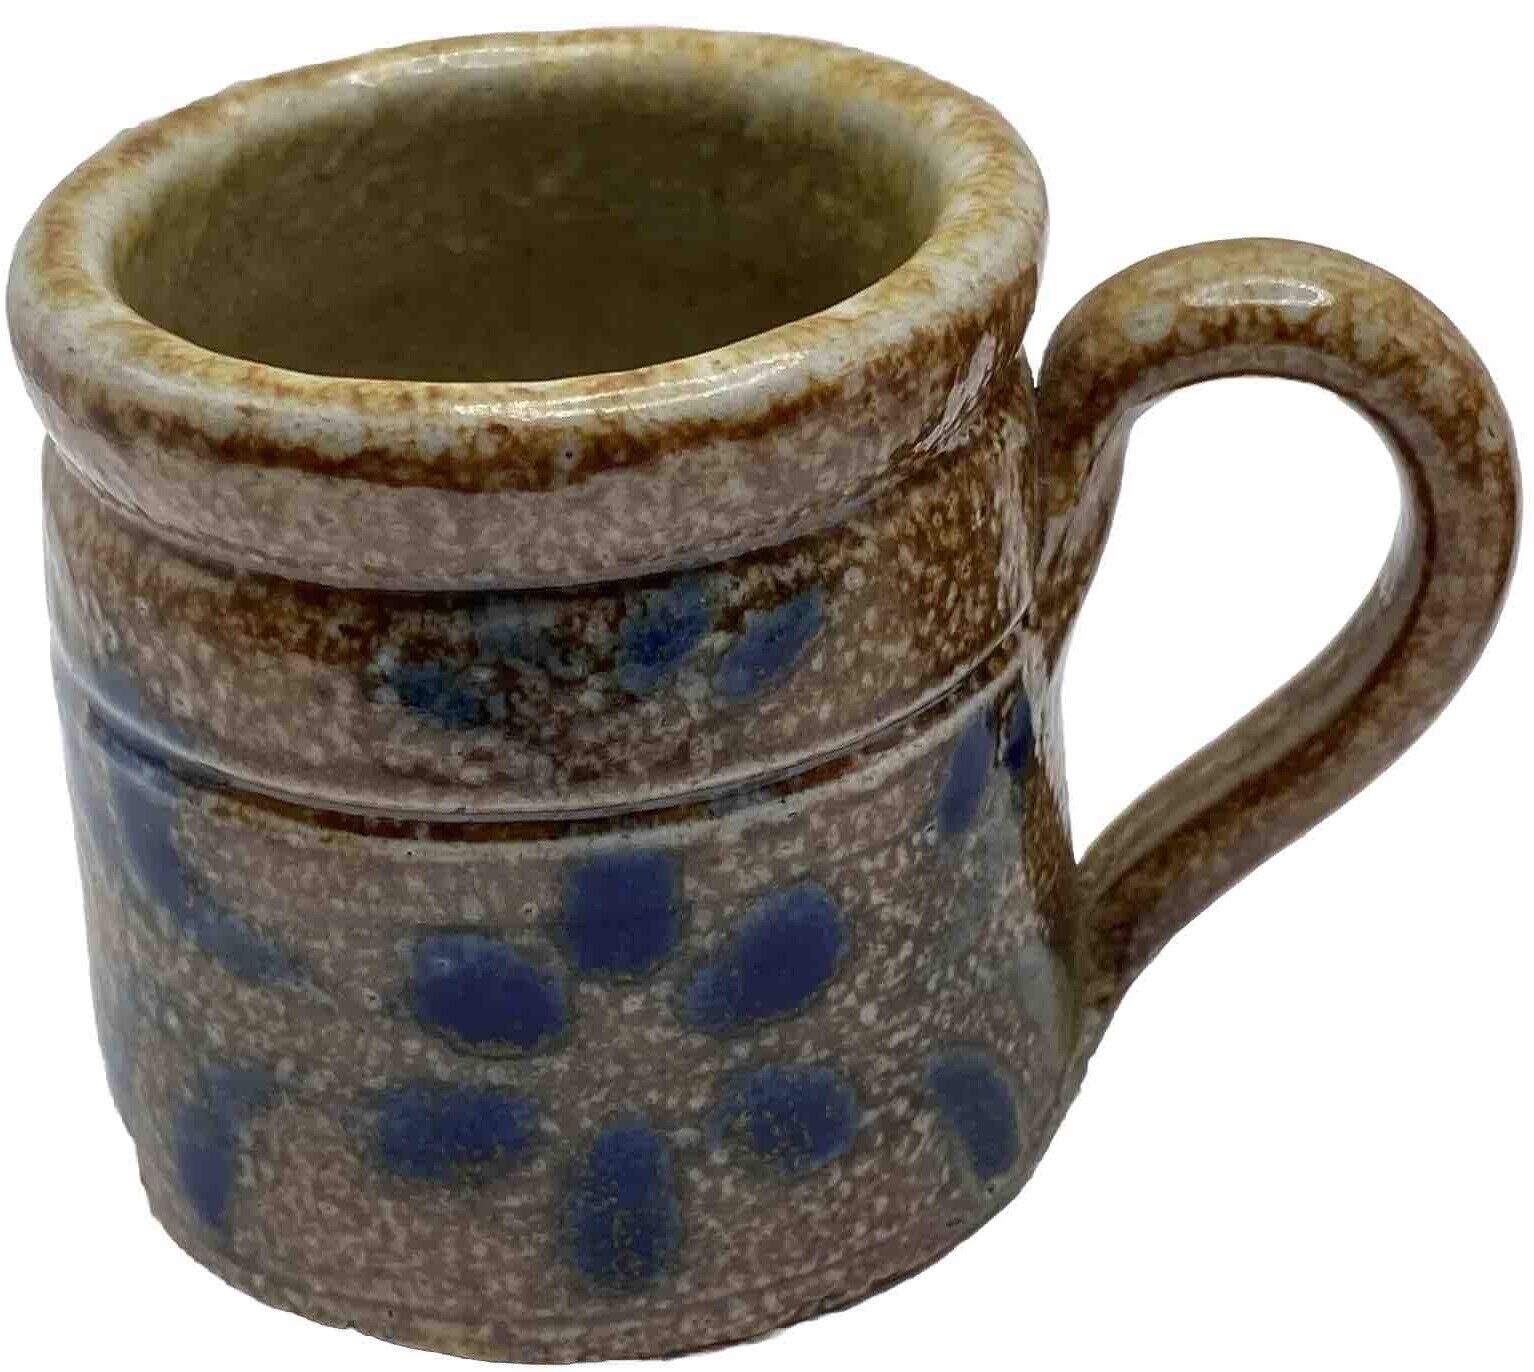 Antique Stoneware Mugs Handcrafted Glazed Pottery Mugs Lot 2 19th Century VTG